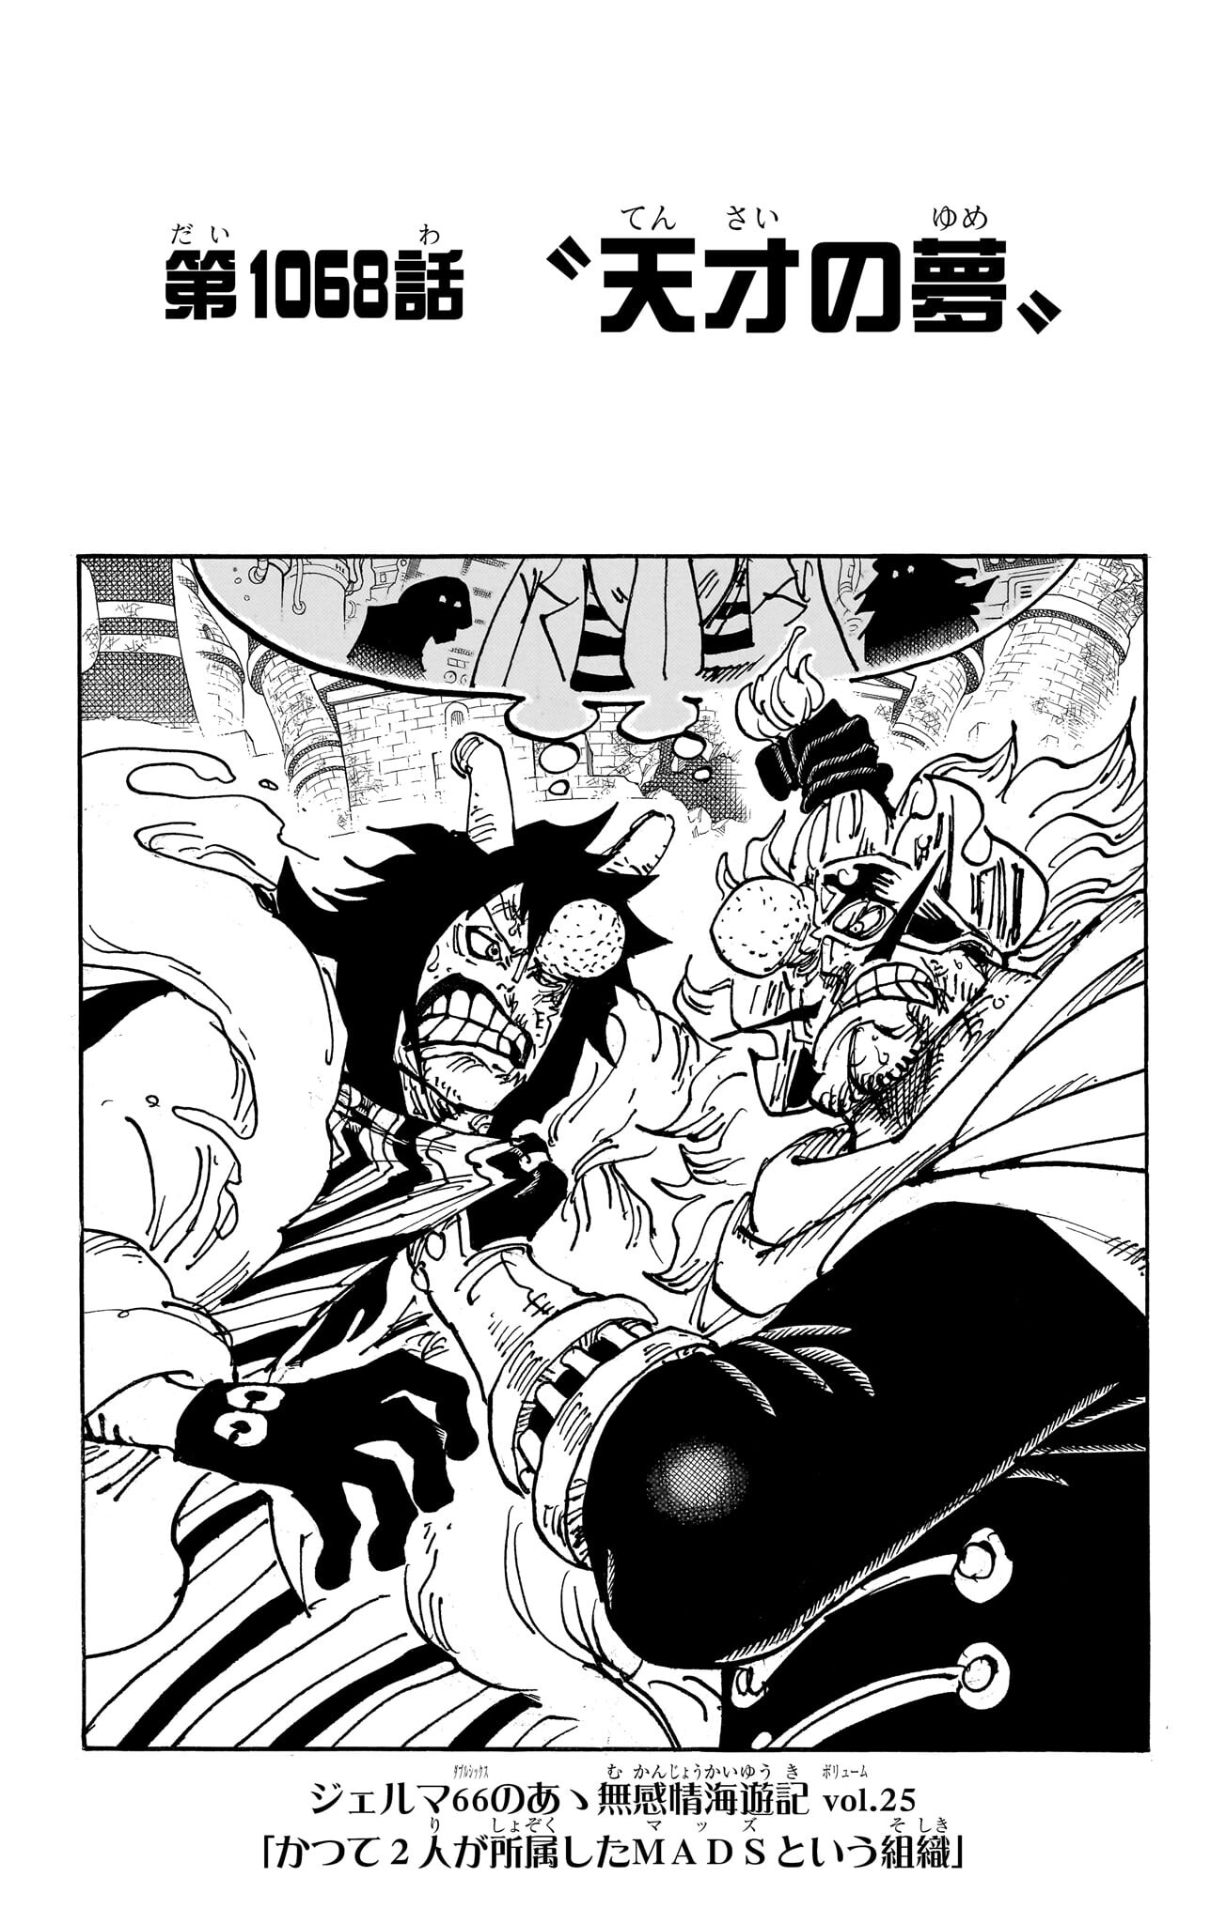 One Piece 1068 brings back Lucci's Rokuogan